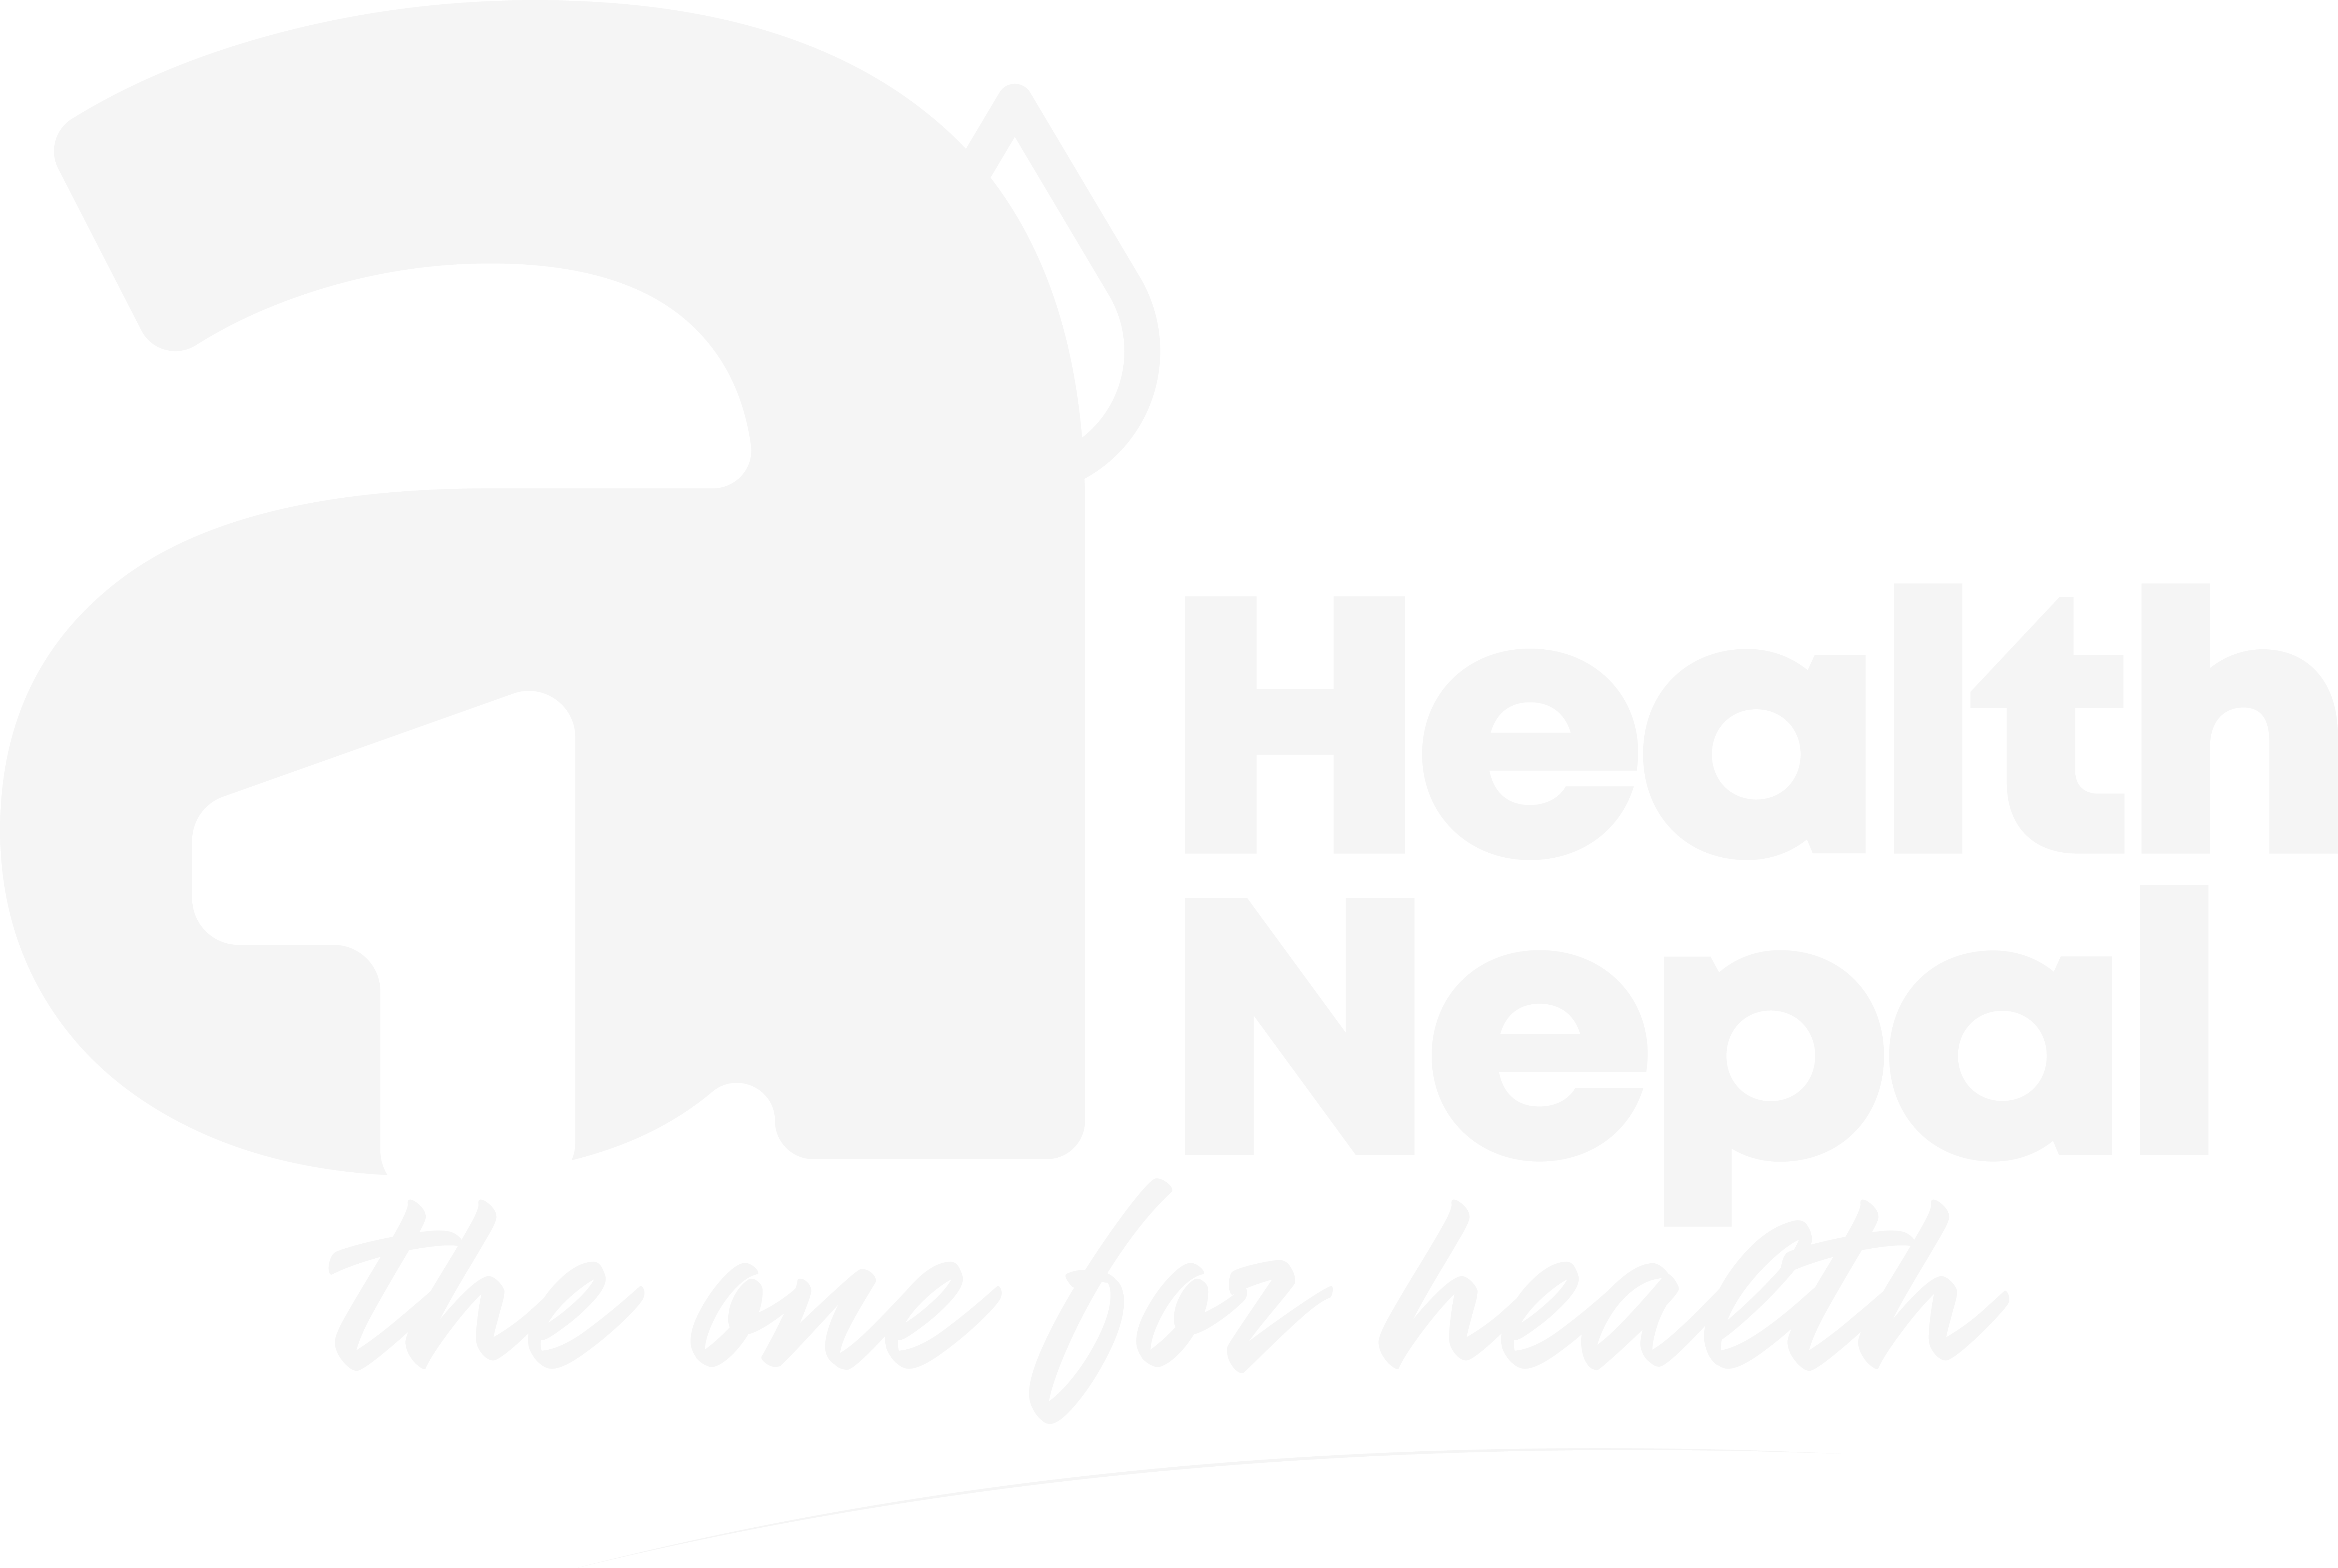 A One Heath Nepal